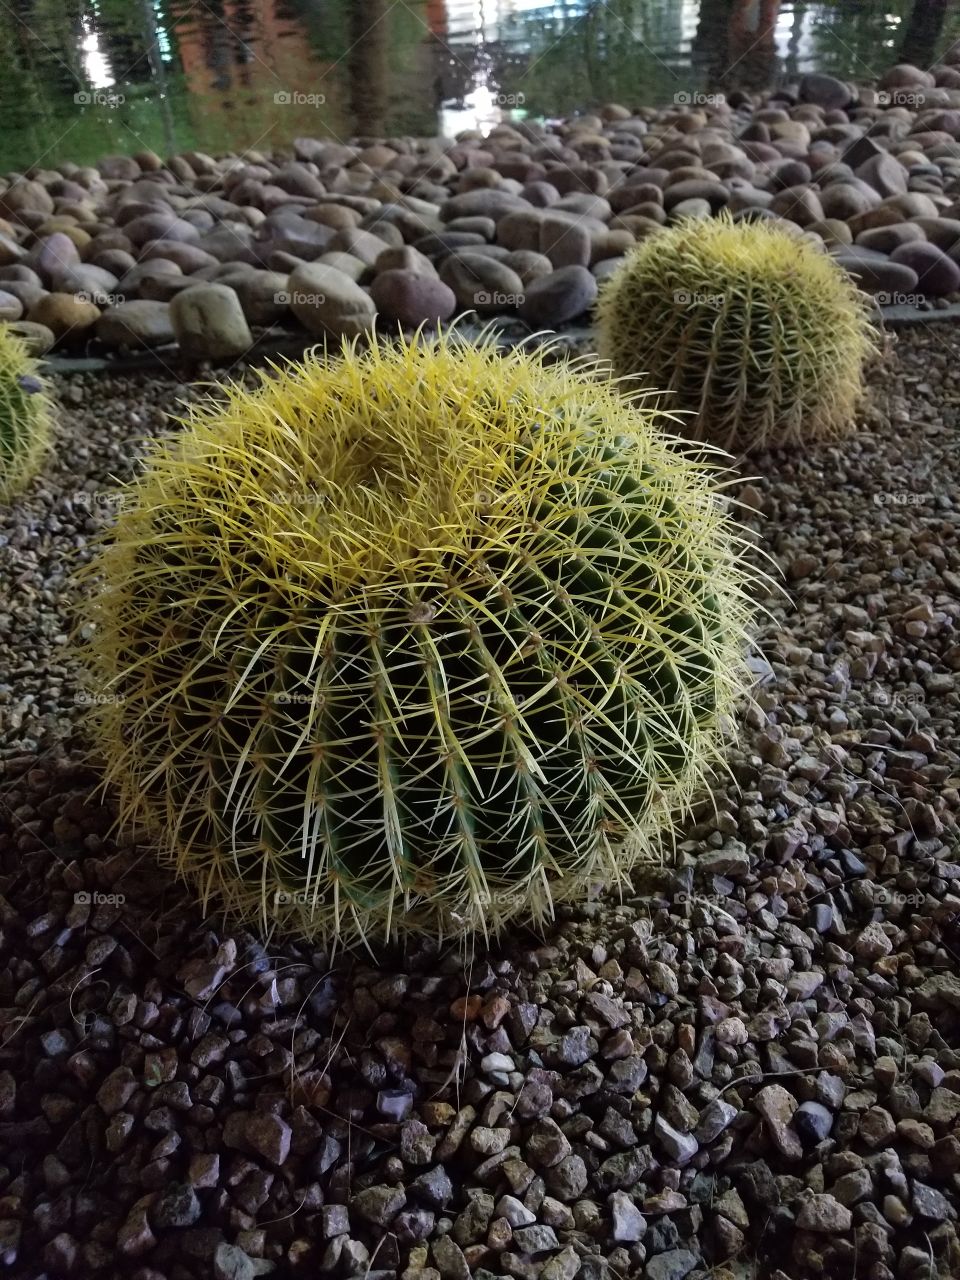 Cactus, Desert, Nevada, Las Vegas, Summerlin, USA